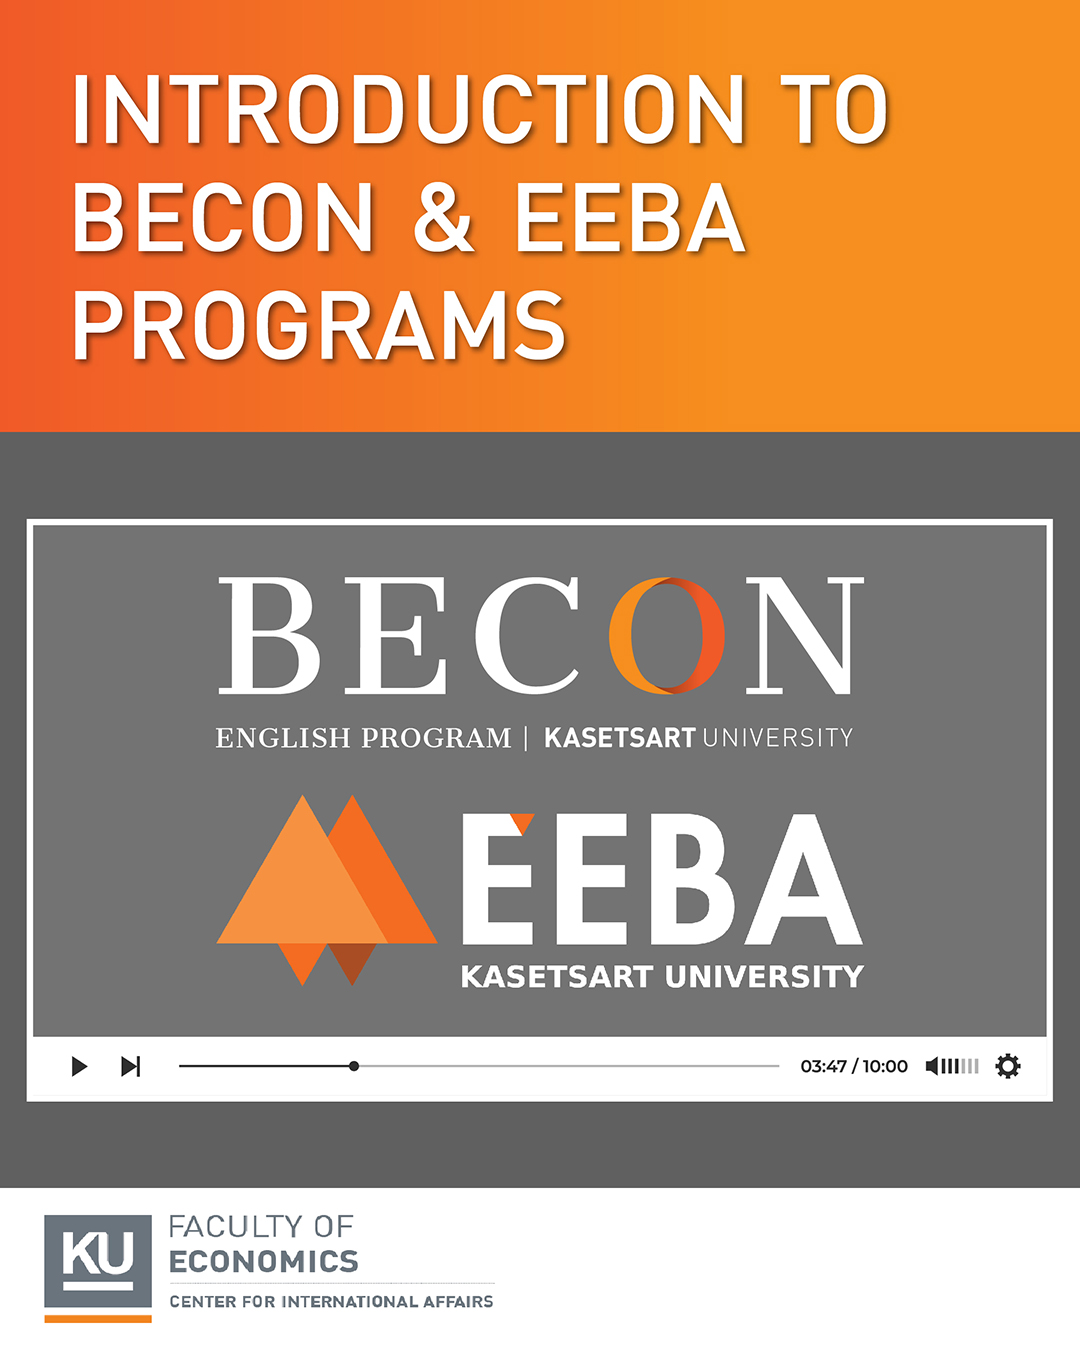 Introduction to BECON & EEBA programs at Faculty of Economics, Kasetsart University